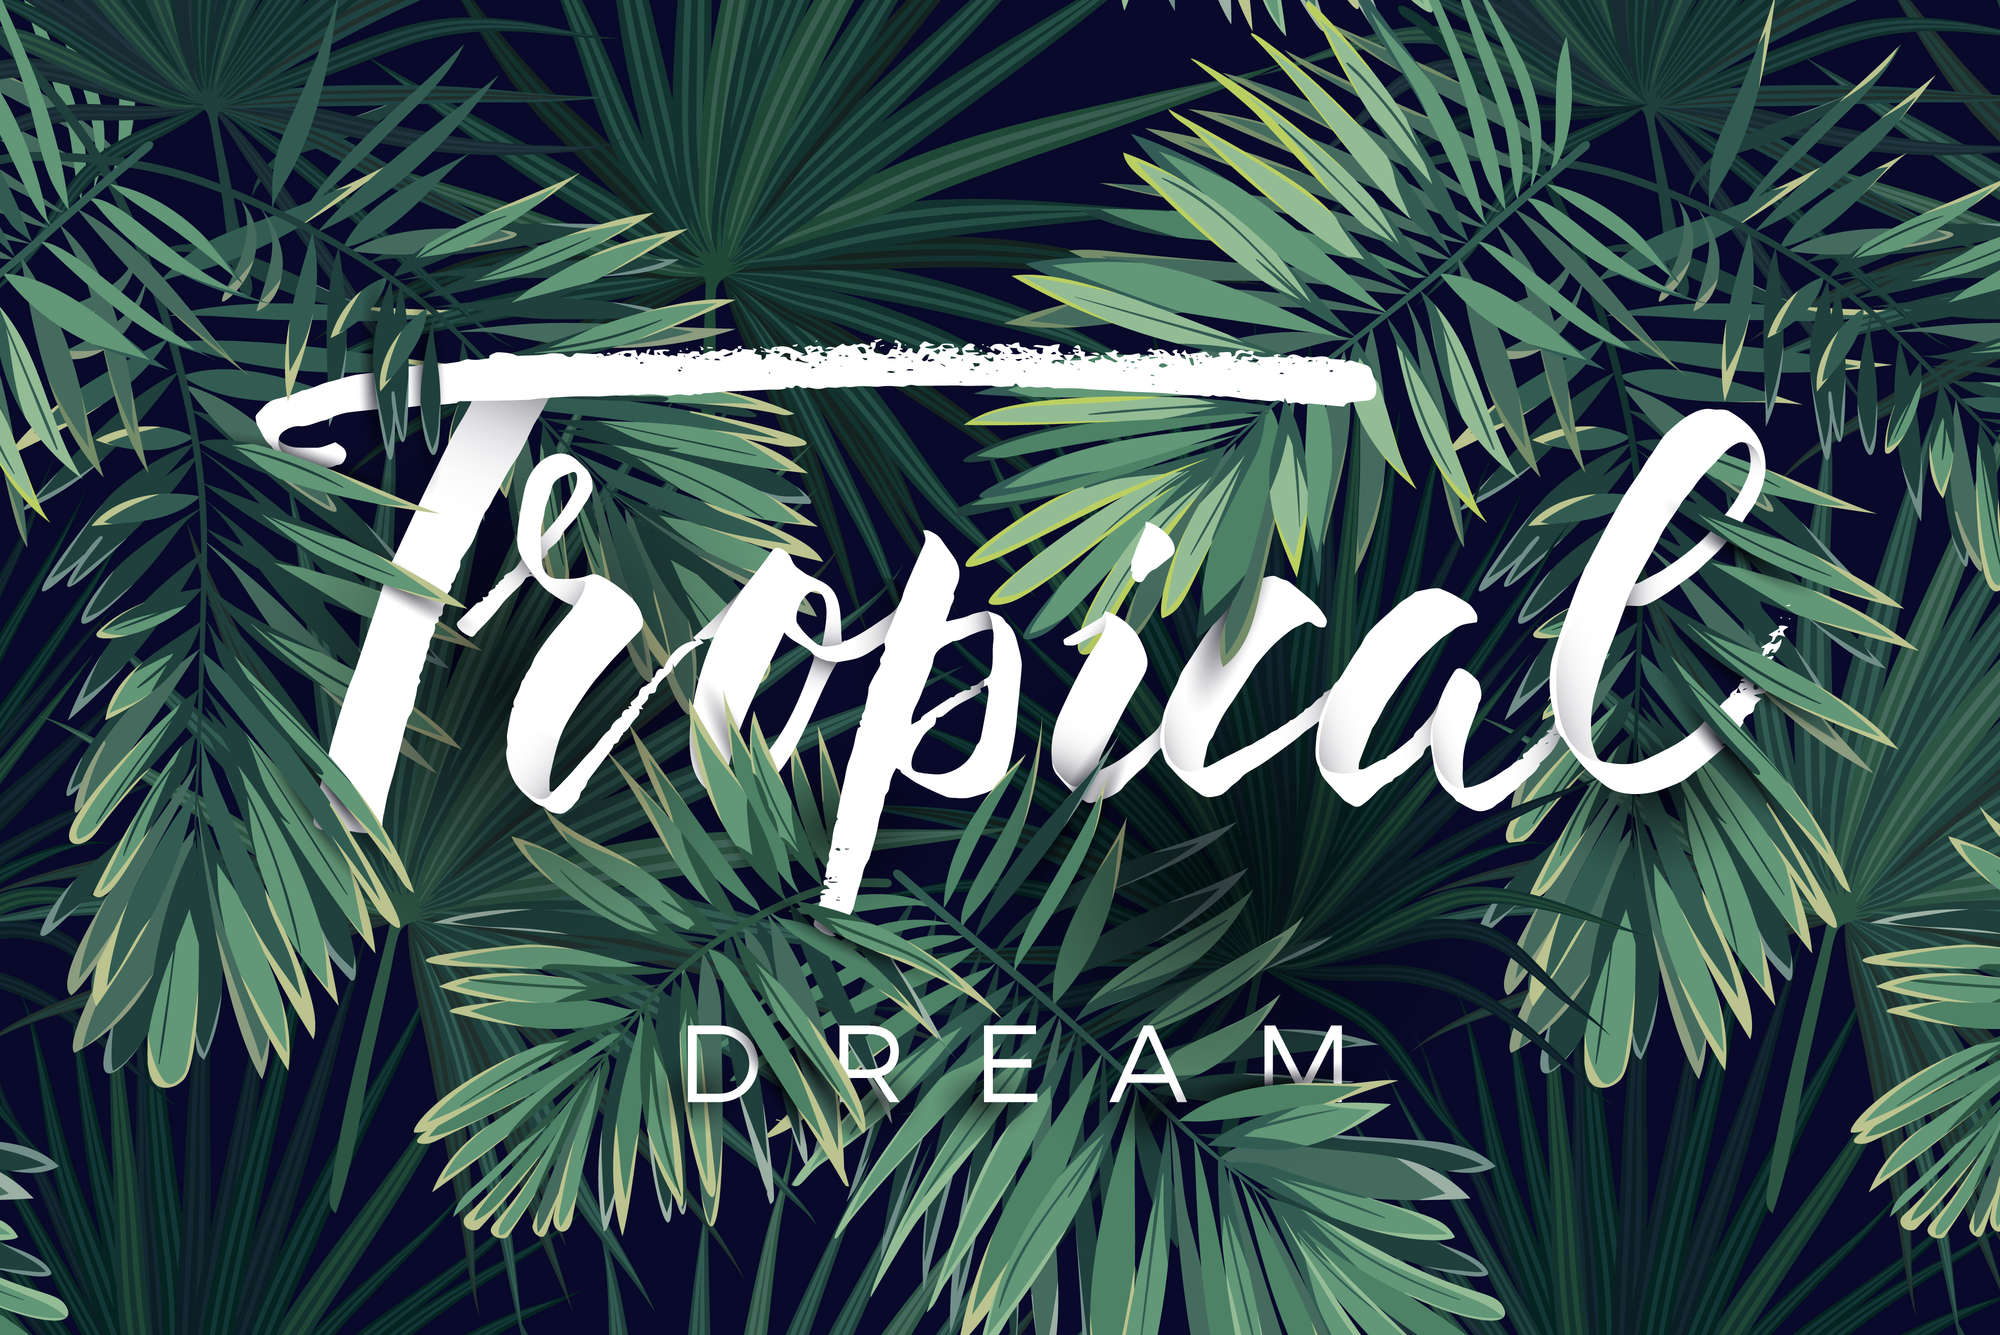             Grafik Fototapete "Tropical Dream" Schriftzug auf Strukturvlies
        